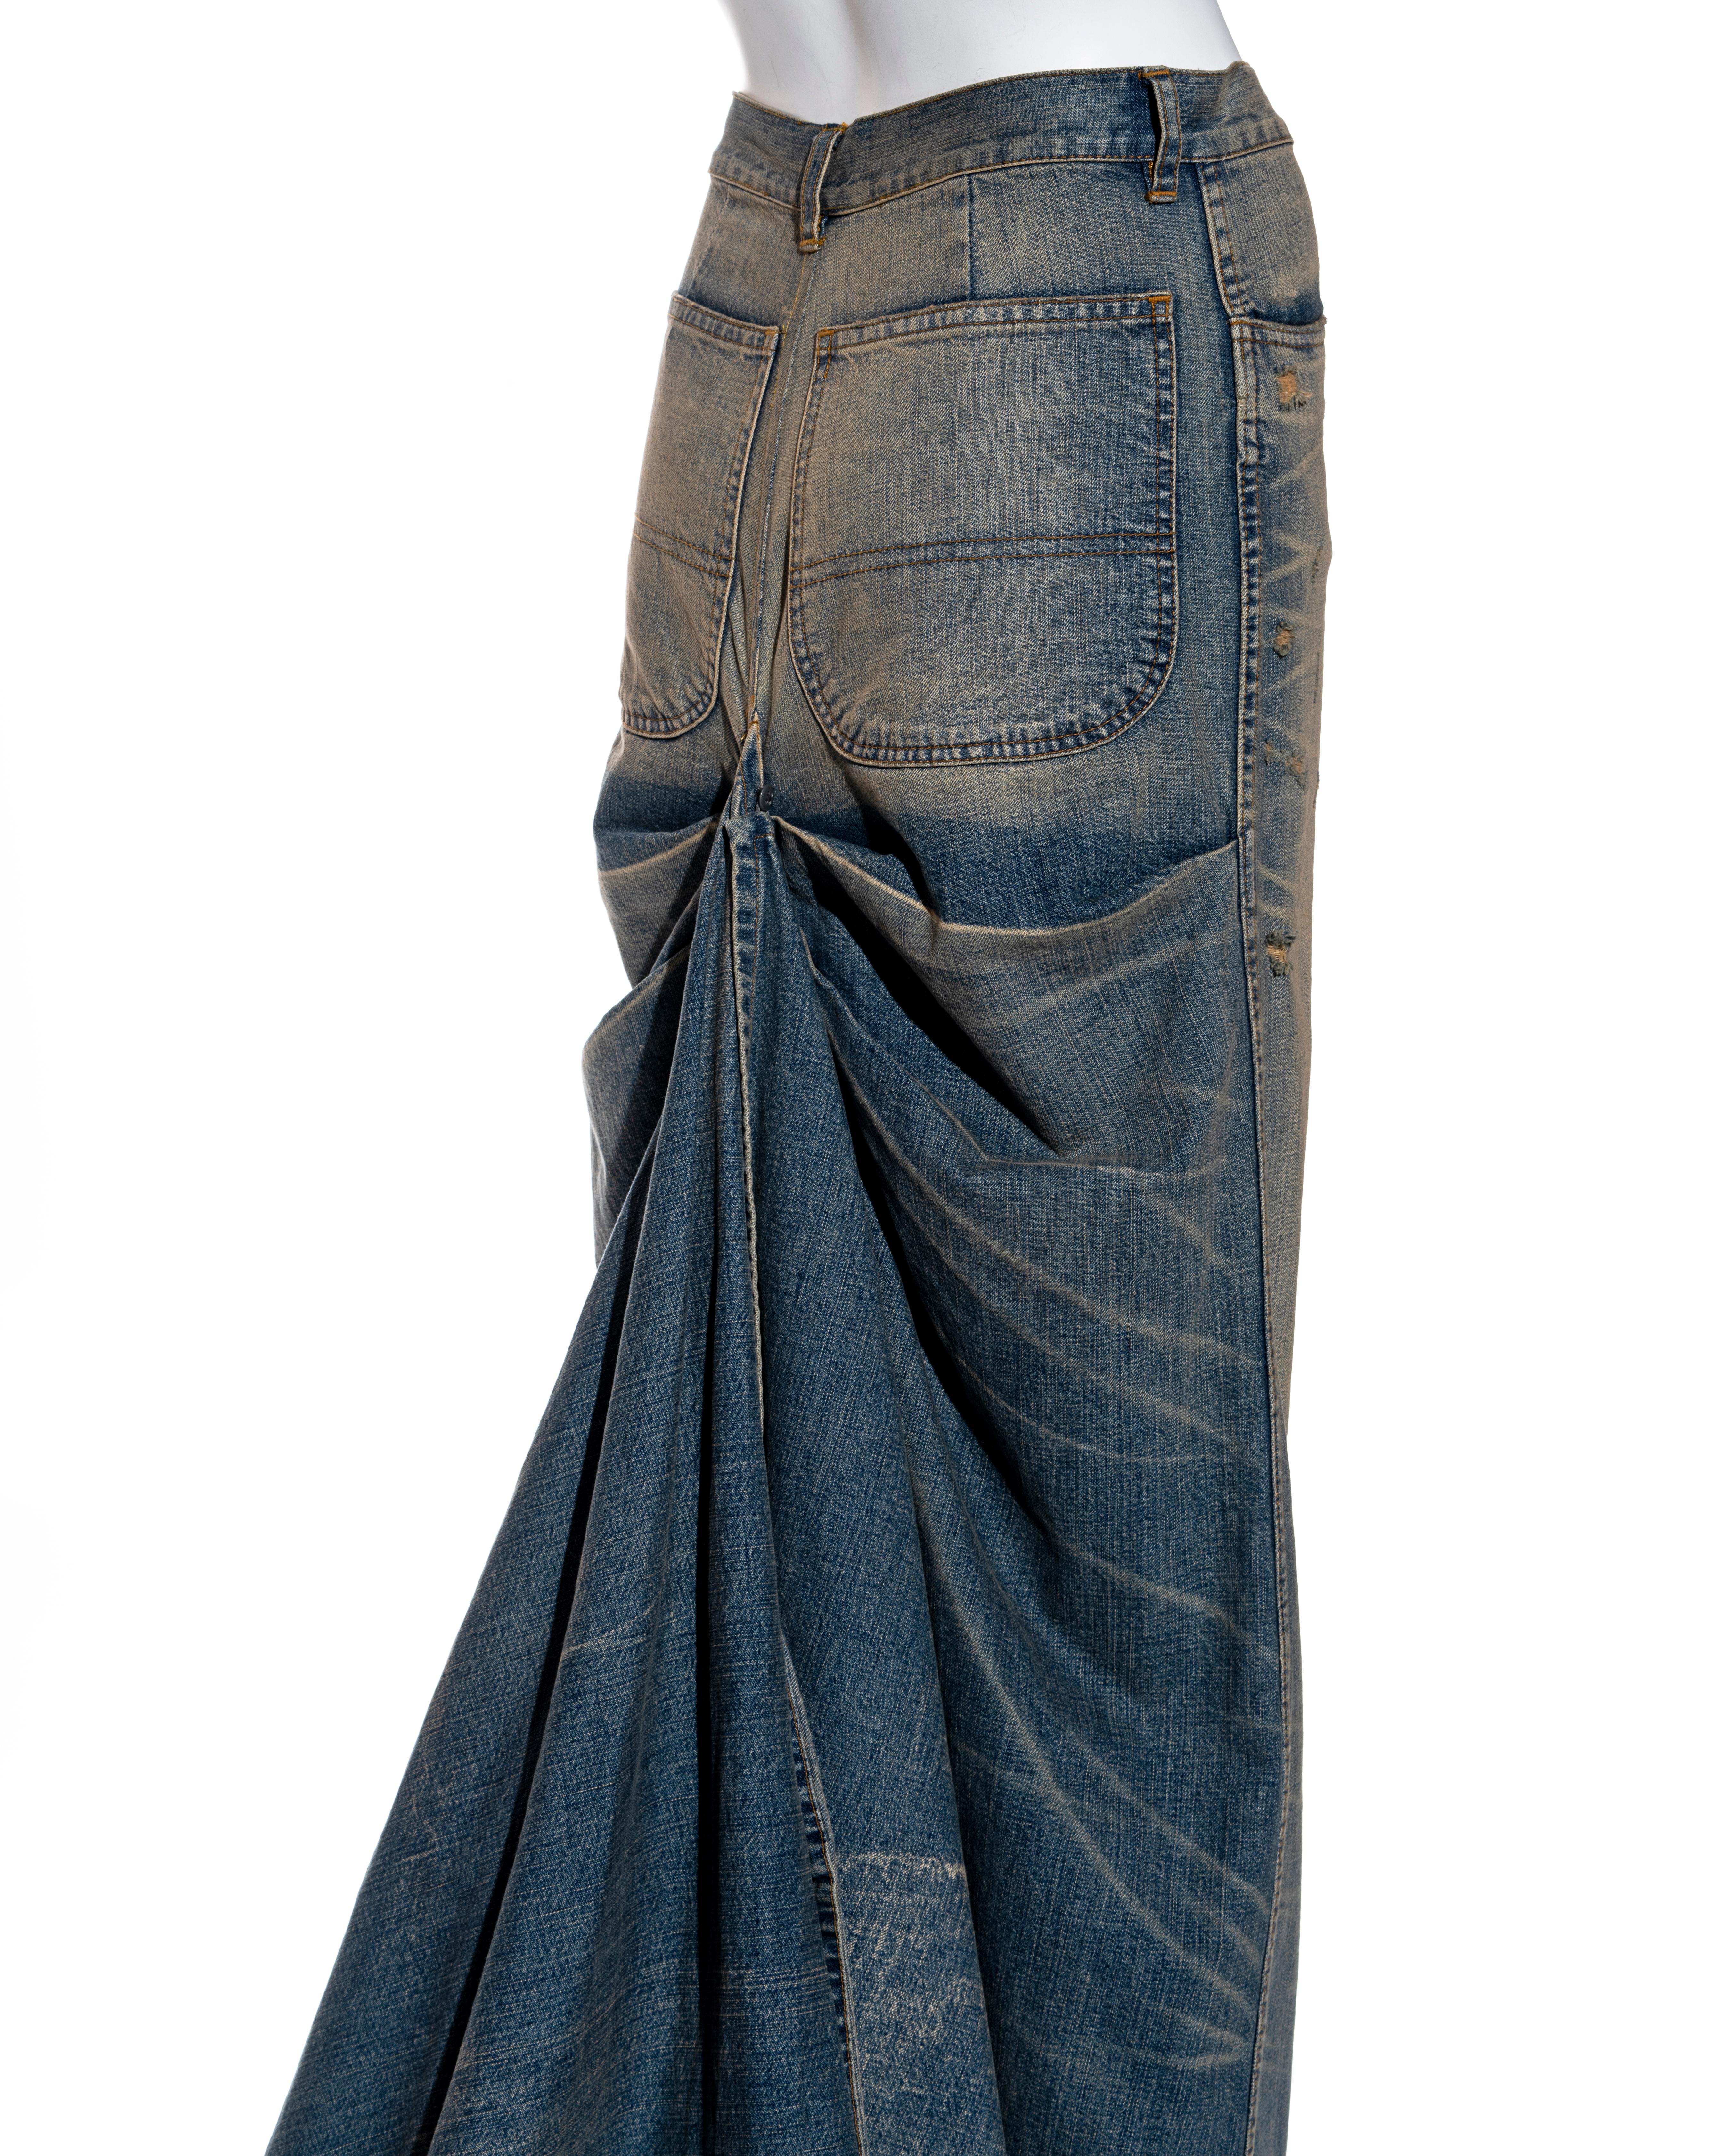 Ralph Lauren distressed denim floor-length bustle skirt with train, ss 2003 2